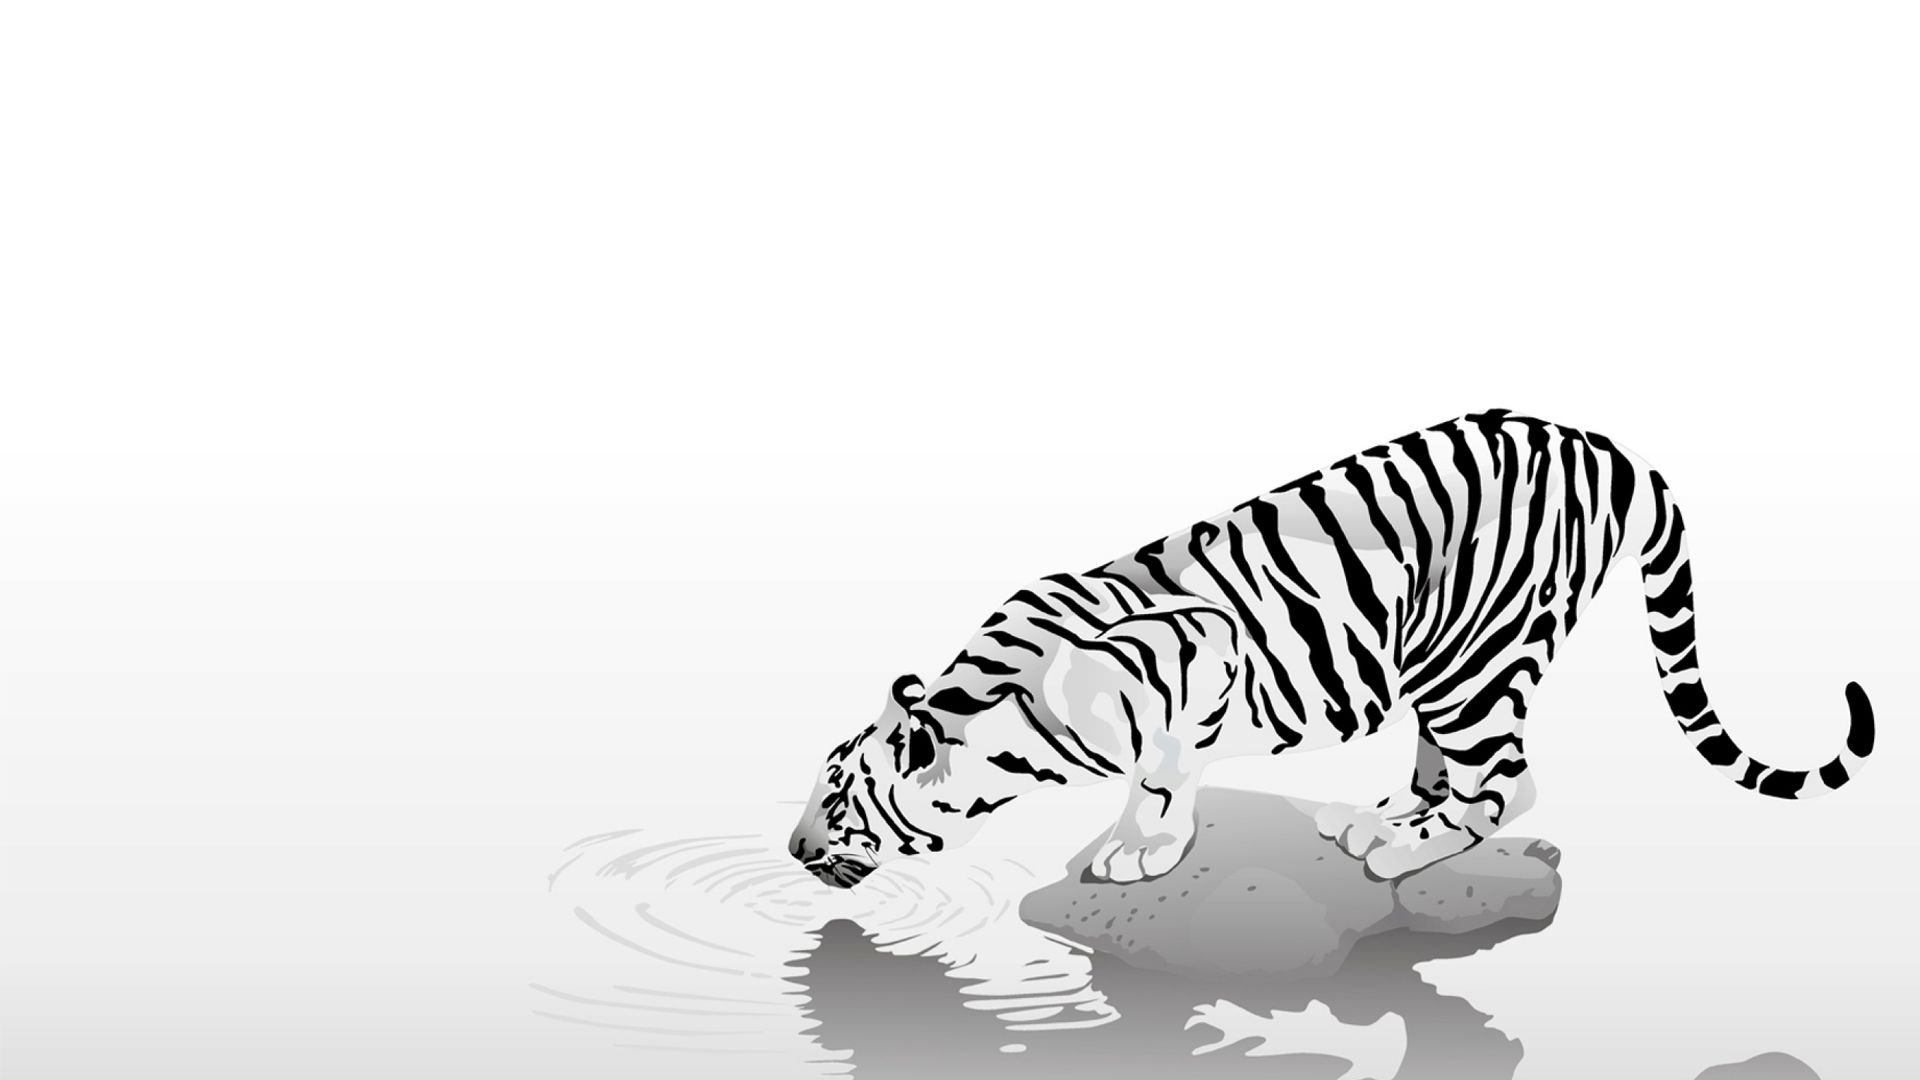 Tiger Art - Tiger Wallpaper For Desktop Black And White - HD Wallpaper 